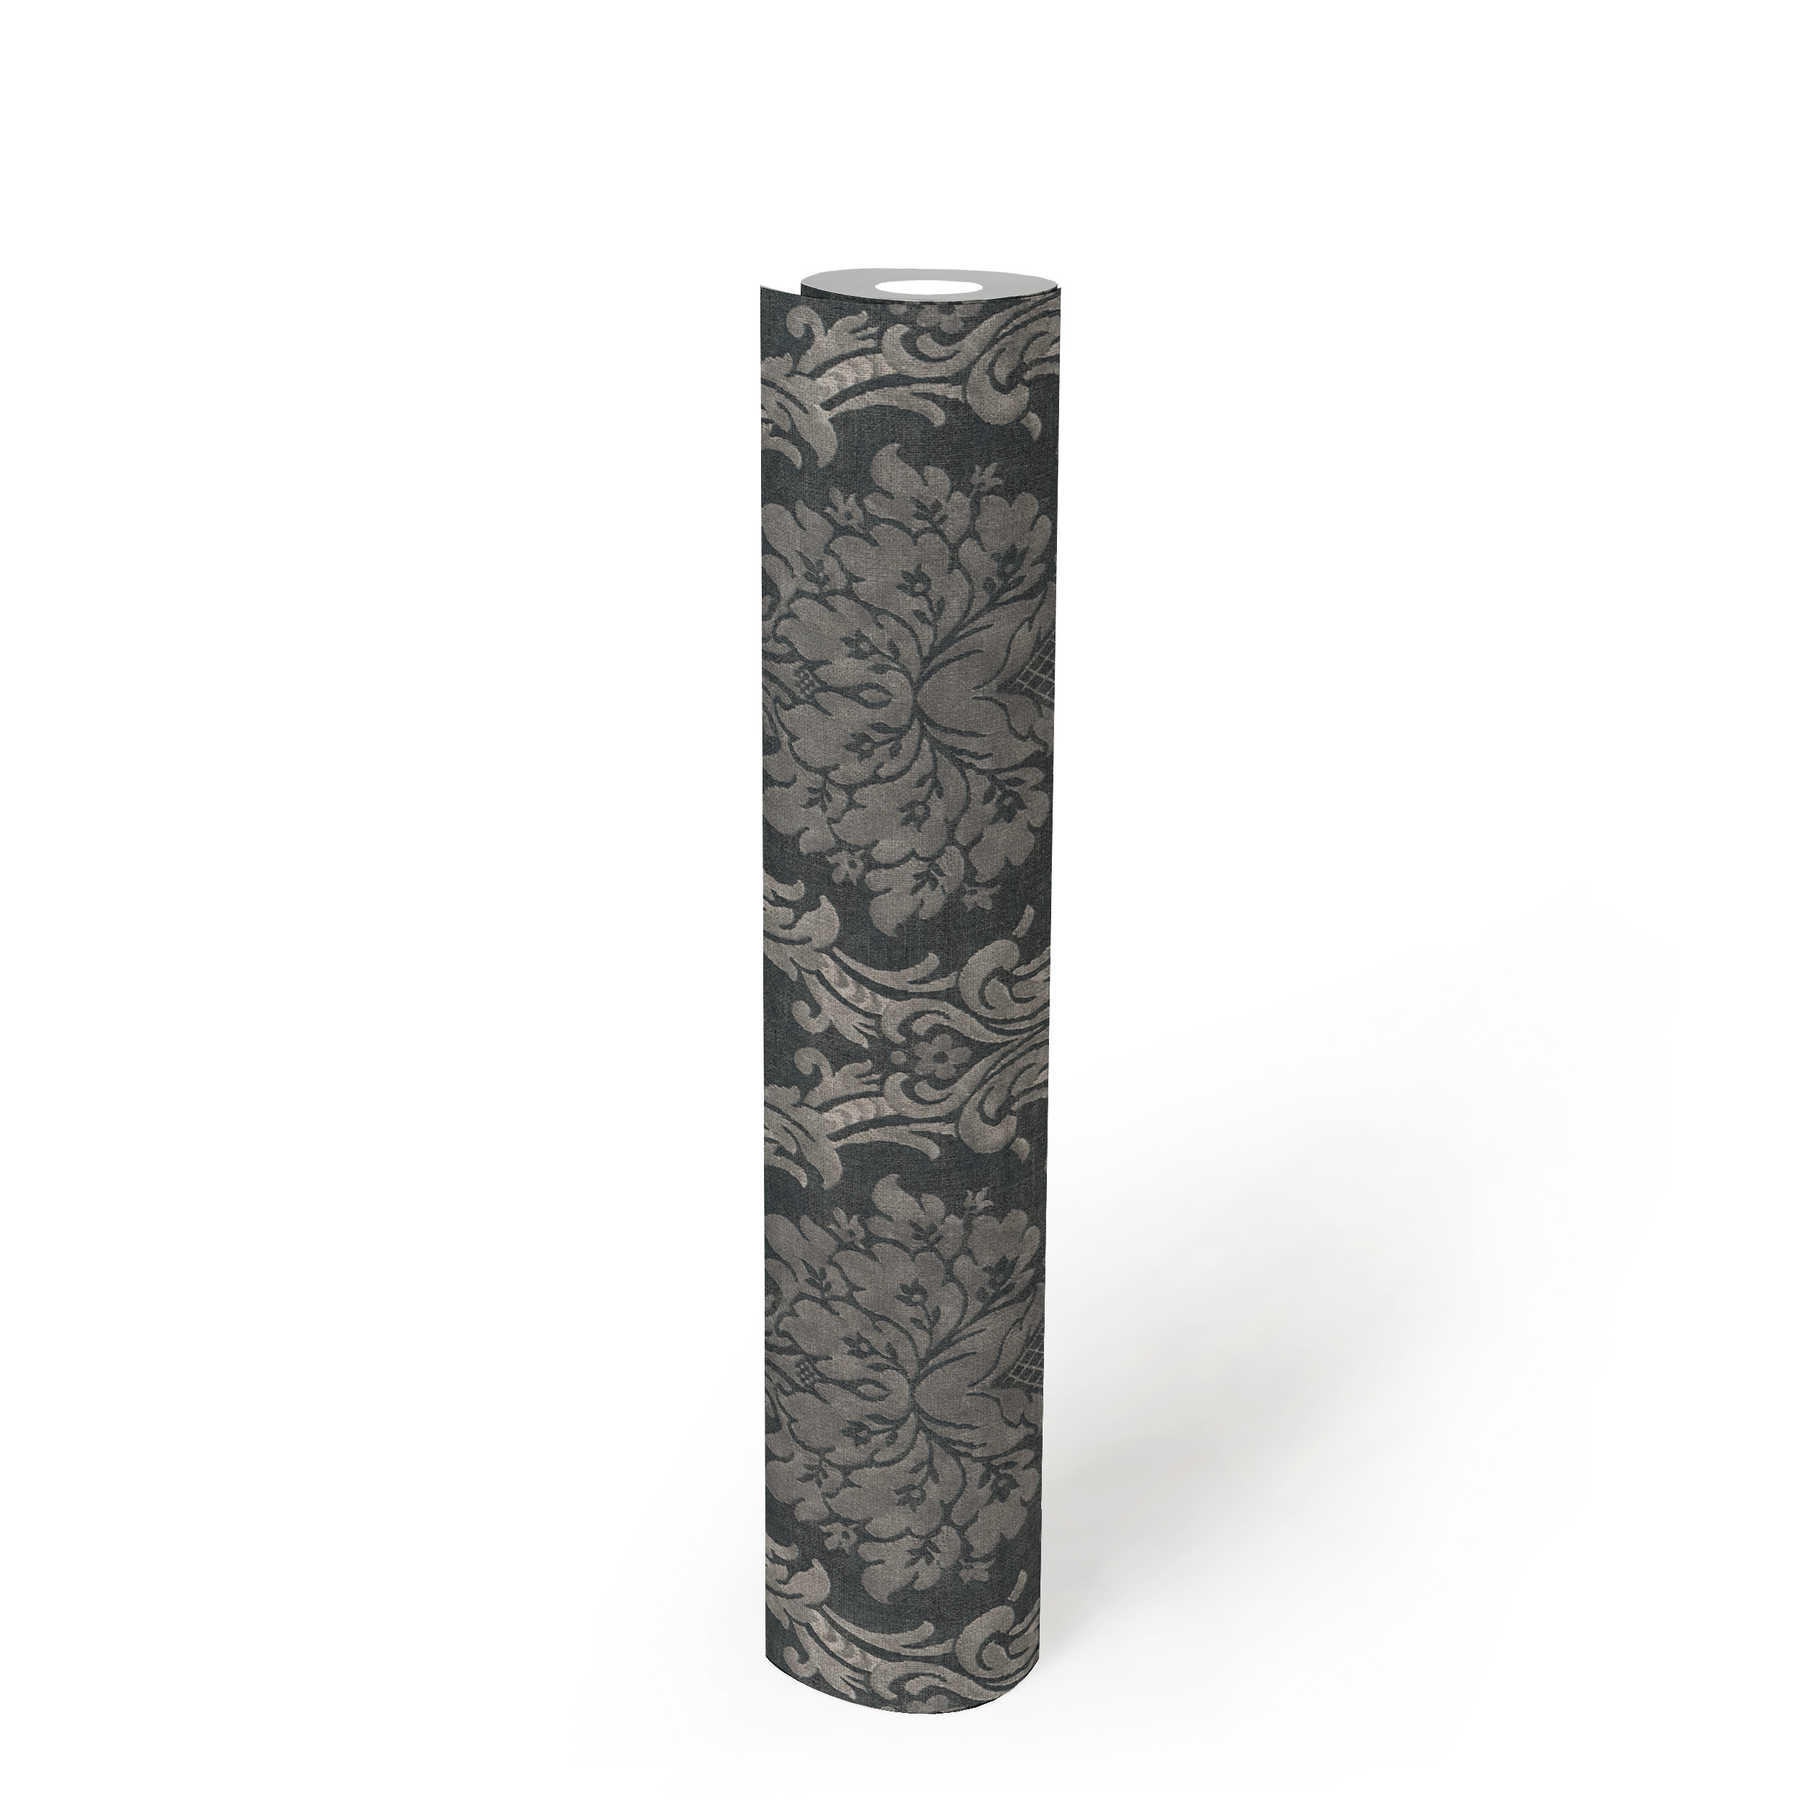             Ornament Tapete mit floralem Korb-Muster – Grau, Schwarz
        